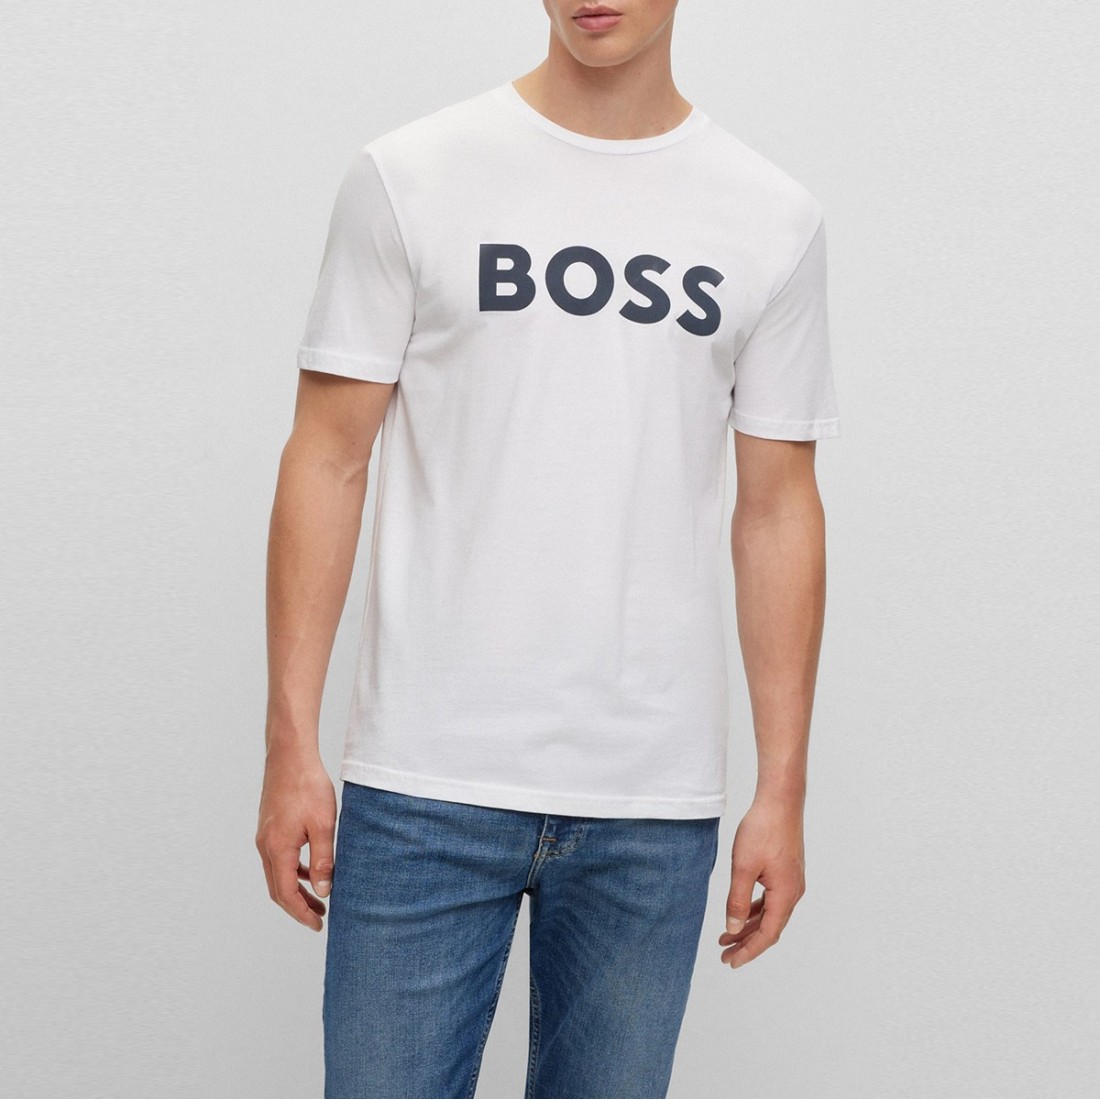 Image of BOSS - T-shirt Thinking - Colore: Bianco,Taglia: M